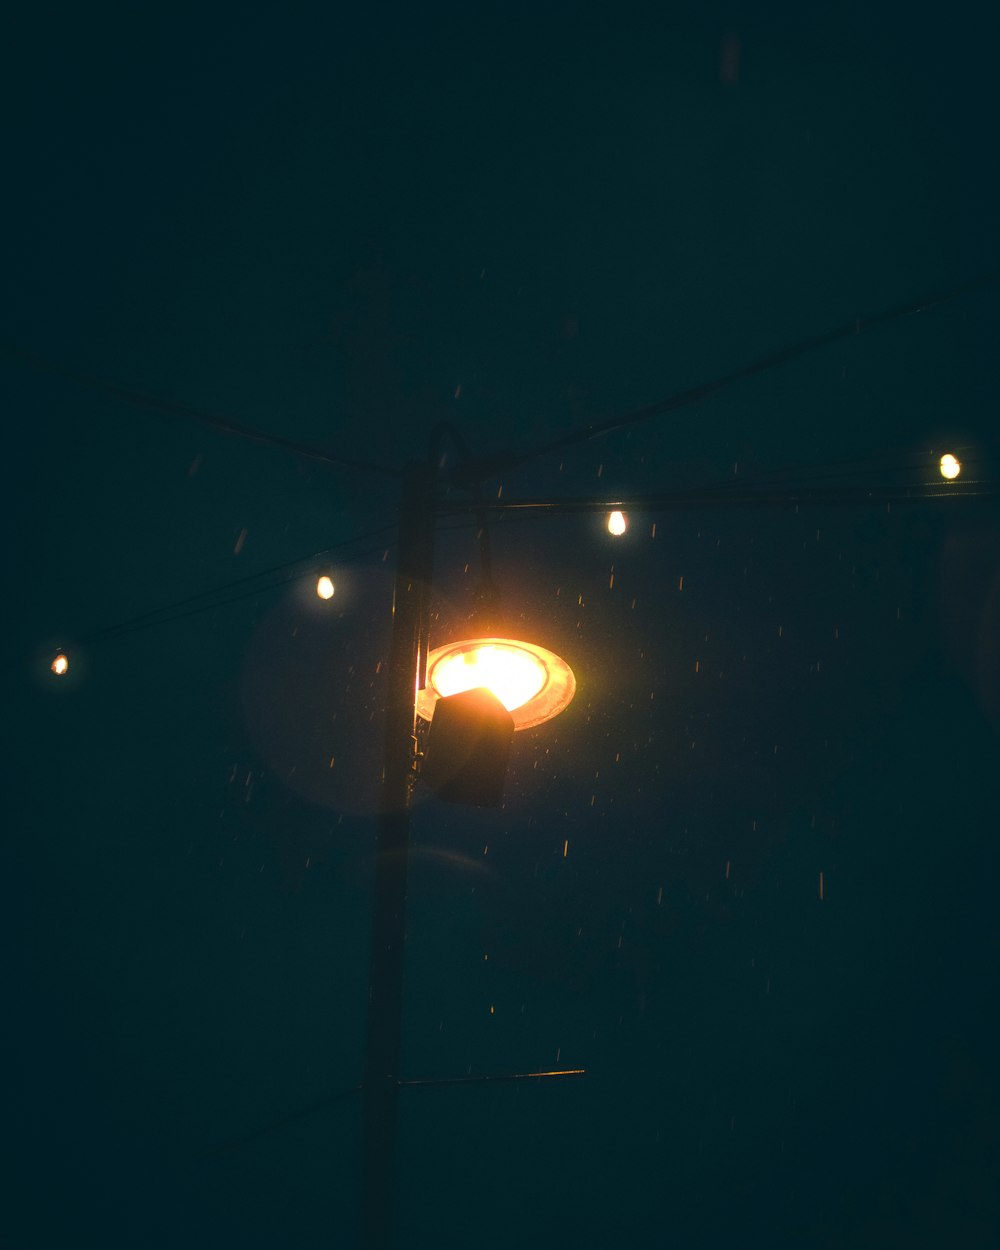 black street light turned on during night time